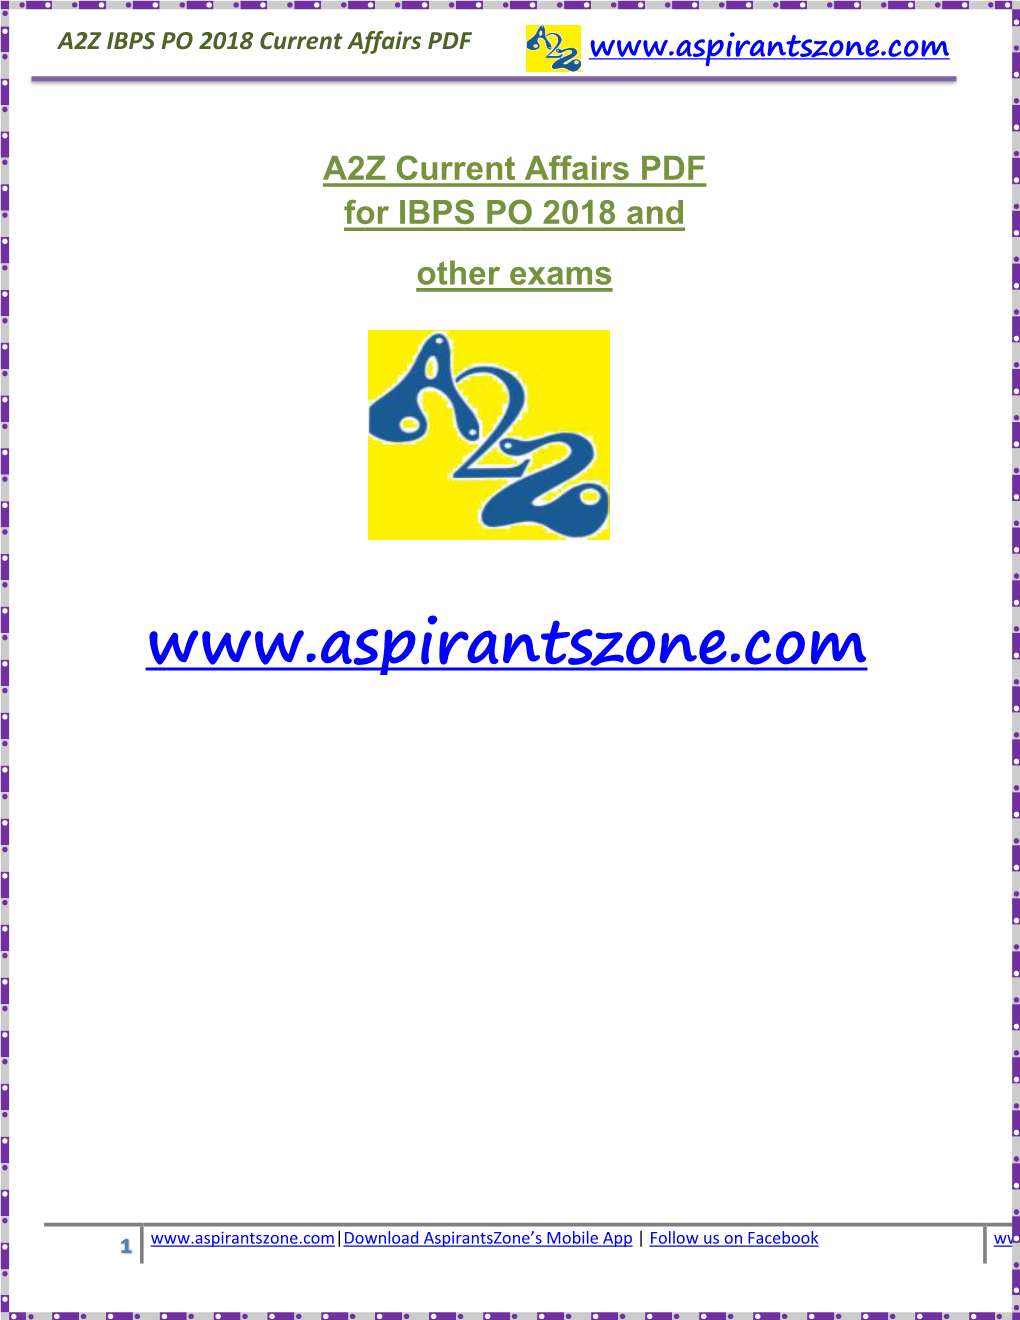 A2Z IBPS PO 2018 Current Affairs PDF